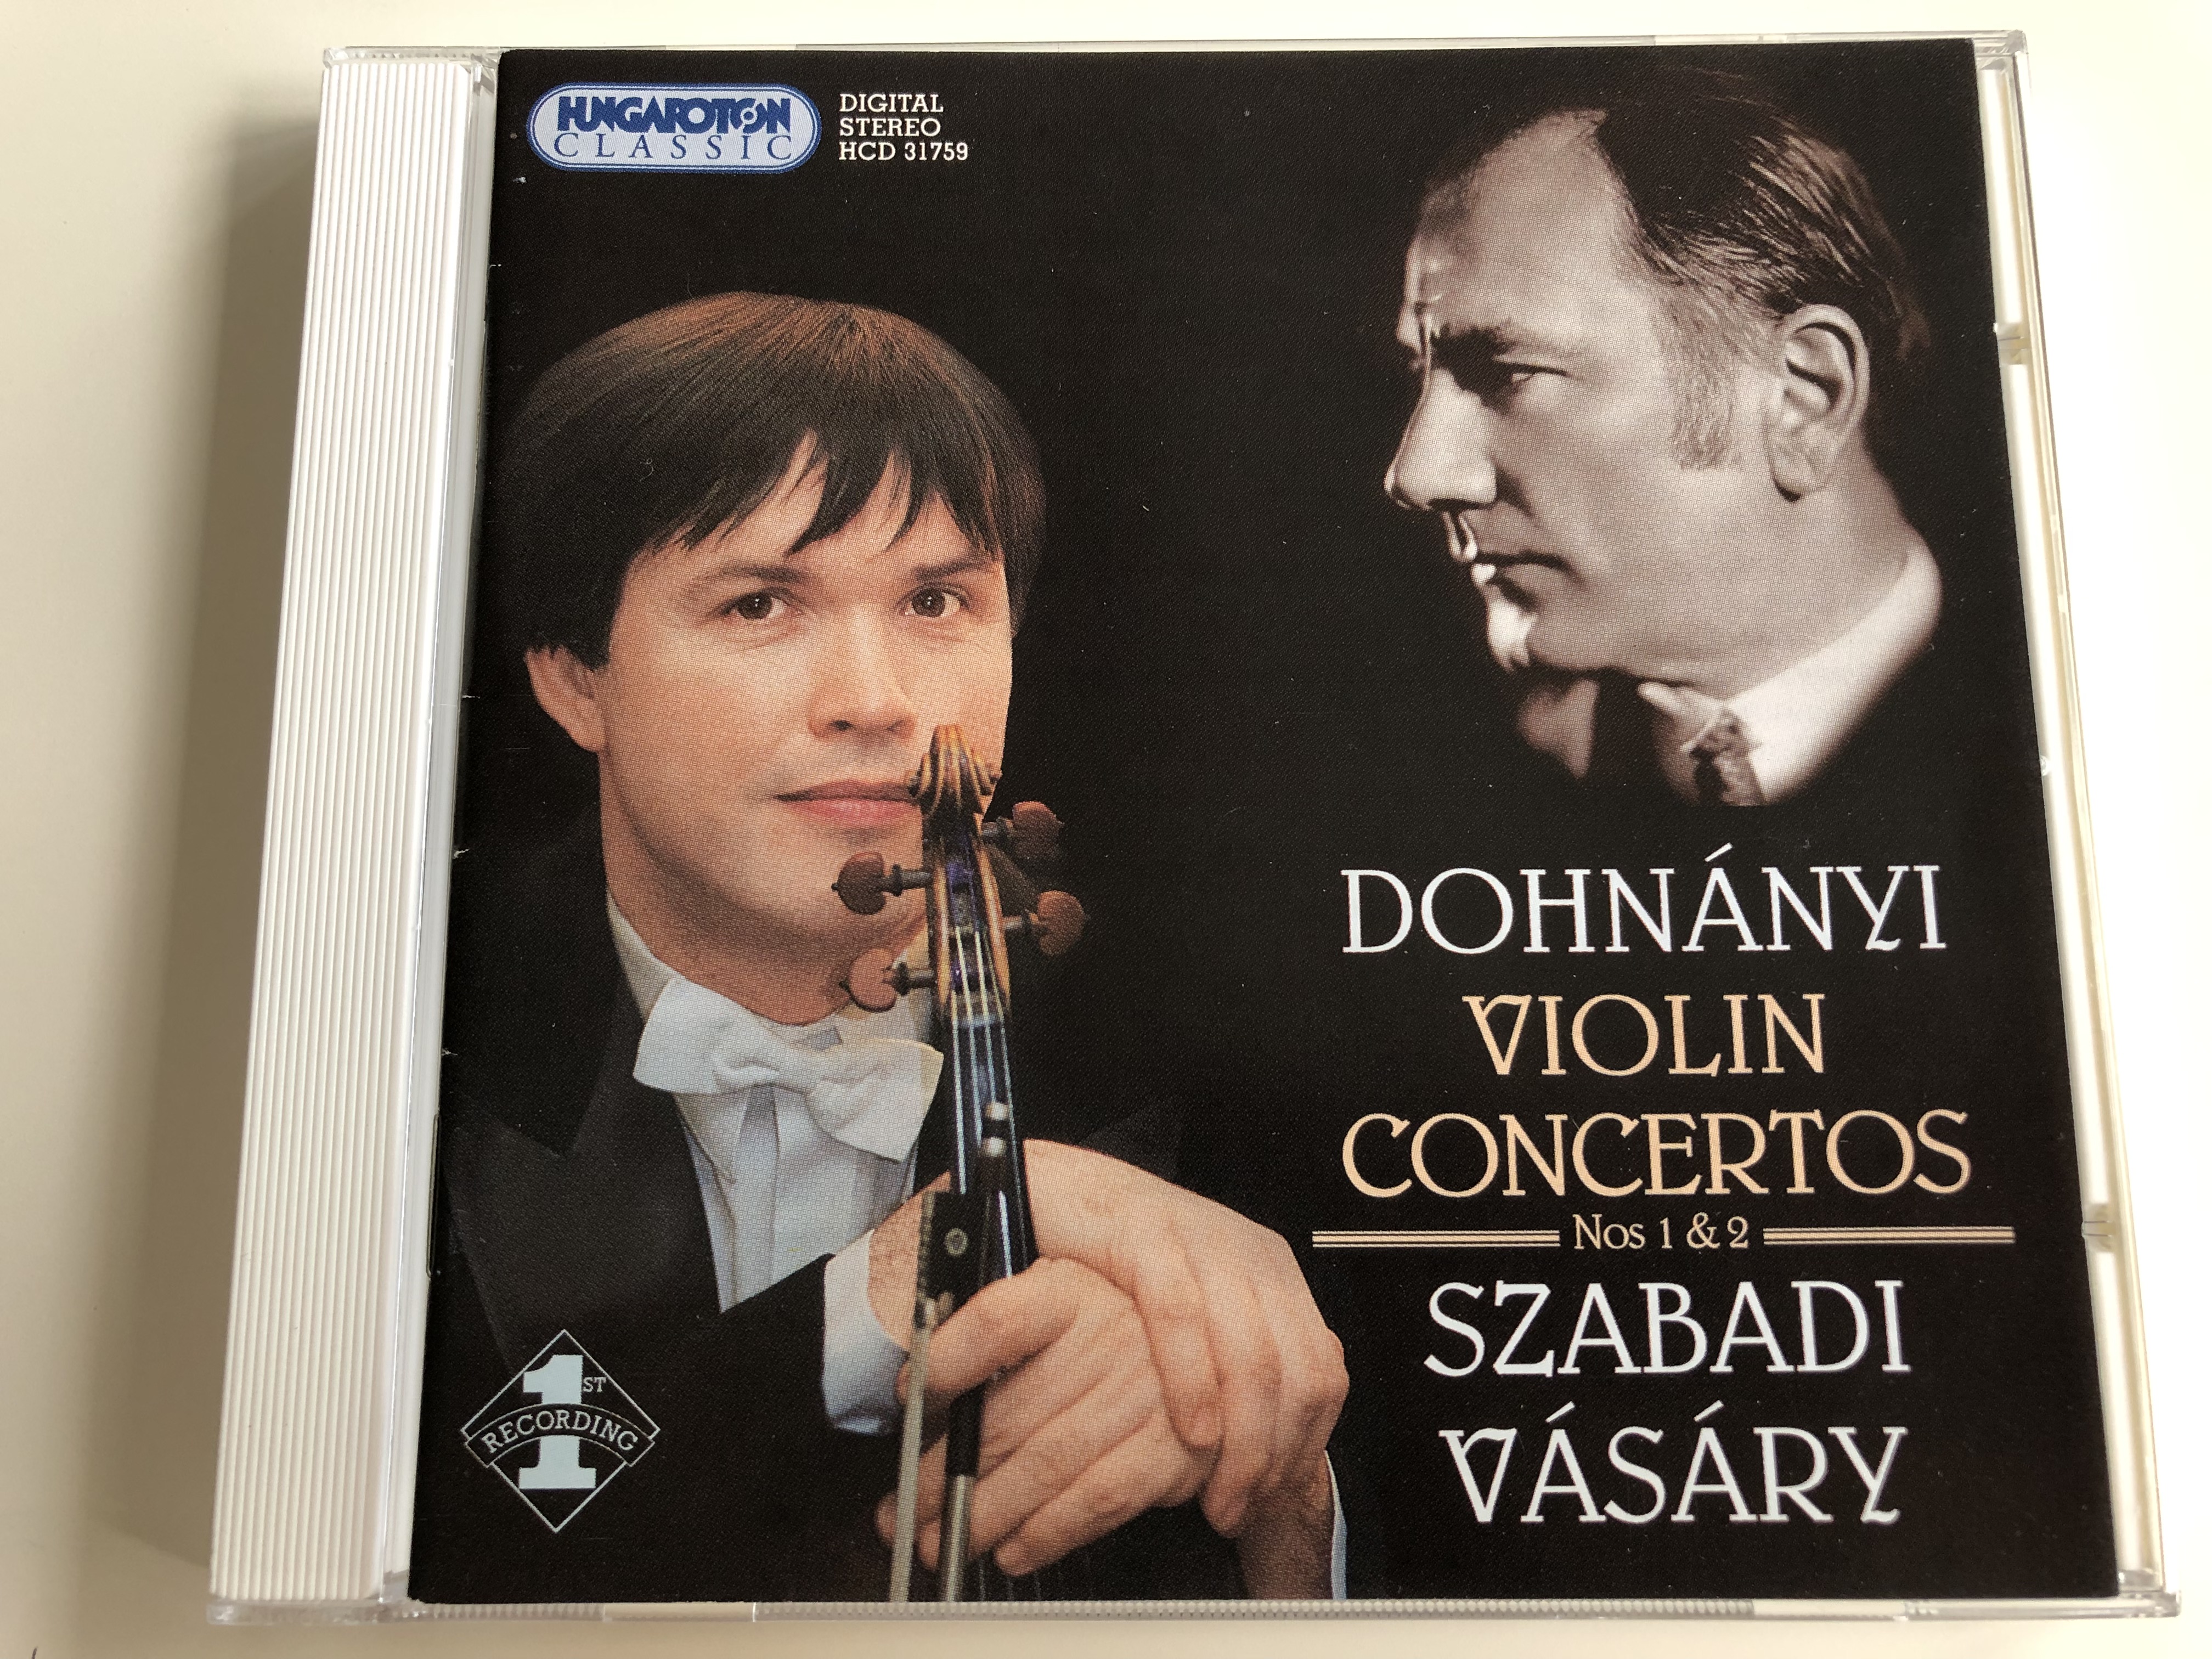 dohn-nyi-violin-concertos-nos-1-2-vilmos-szabadi-violin-budapest-symphony-orchestra-conducted-by-tam-s-v-s-ry-audio-cd-1998-hungaroton-hcd-31759-1-.jpg